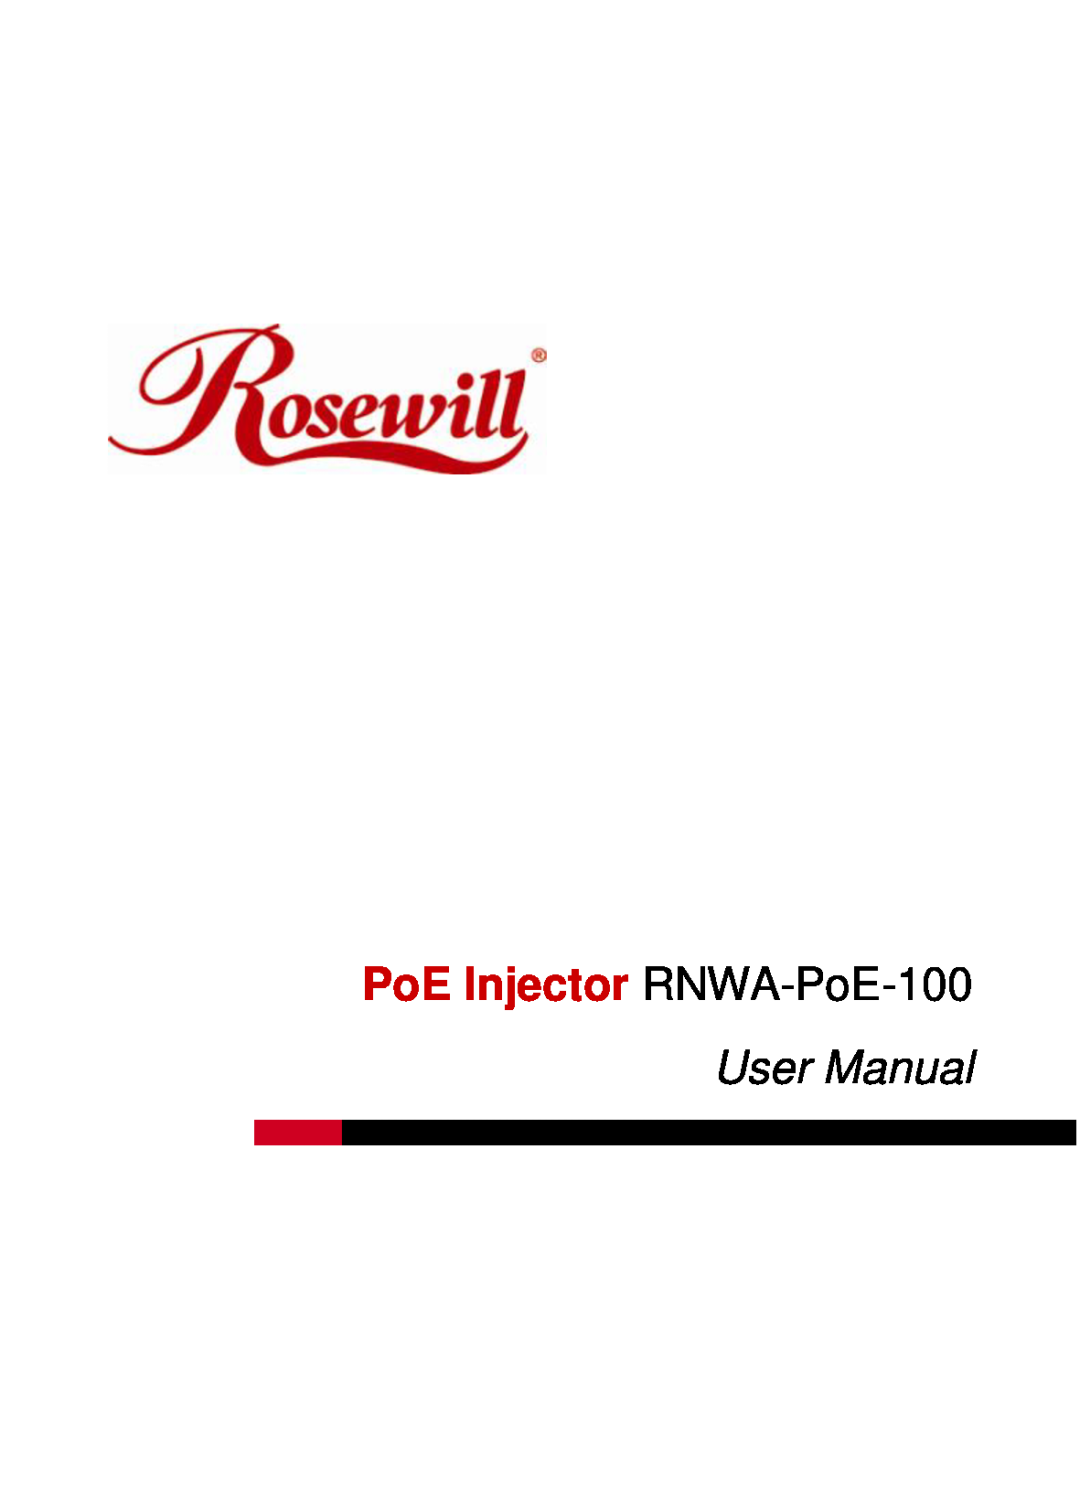 Rosewill user manual PoE Injector RNWA-PoE-100, User Manual 